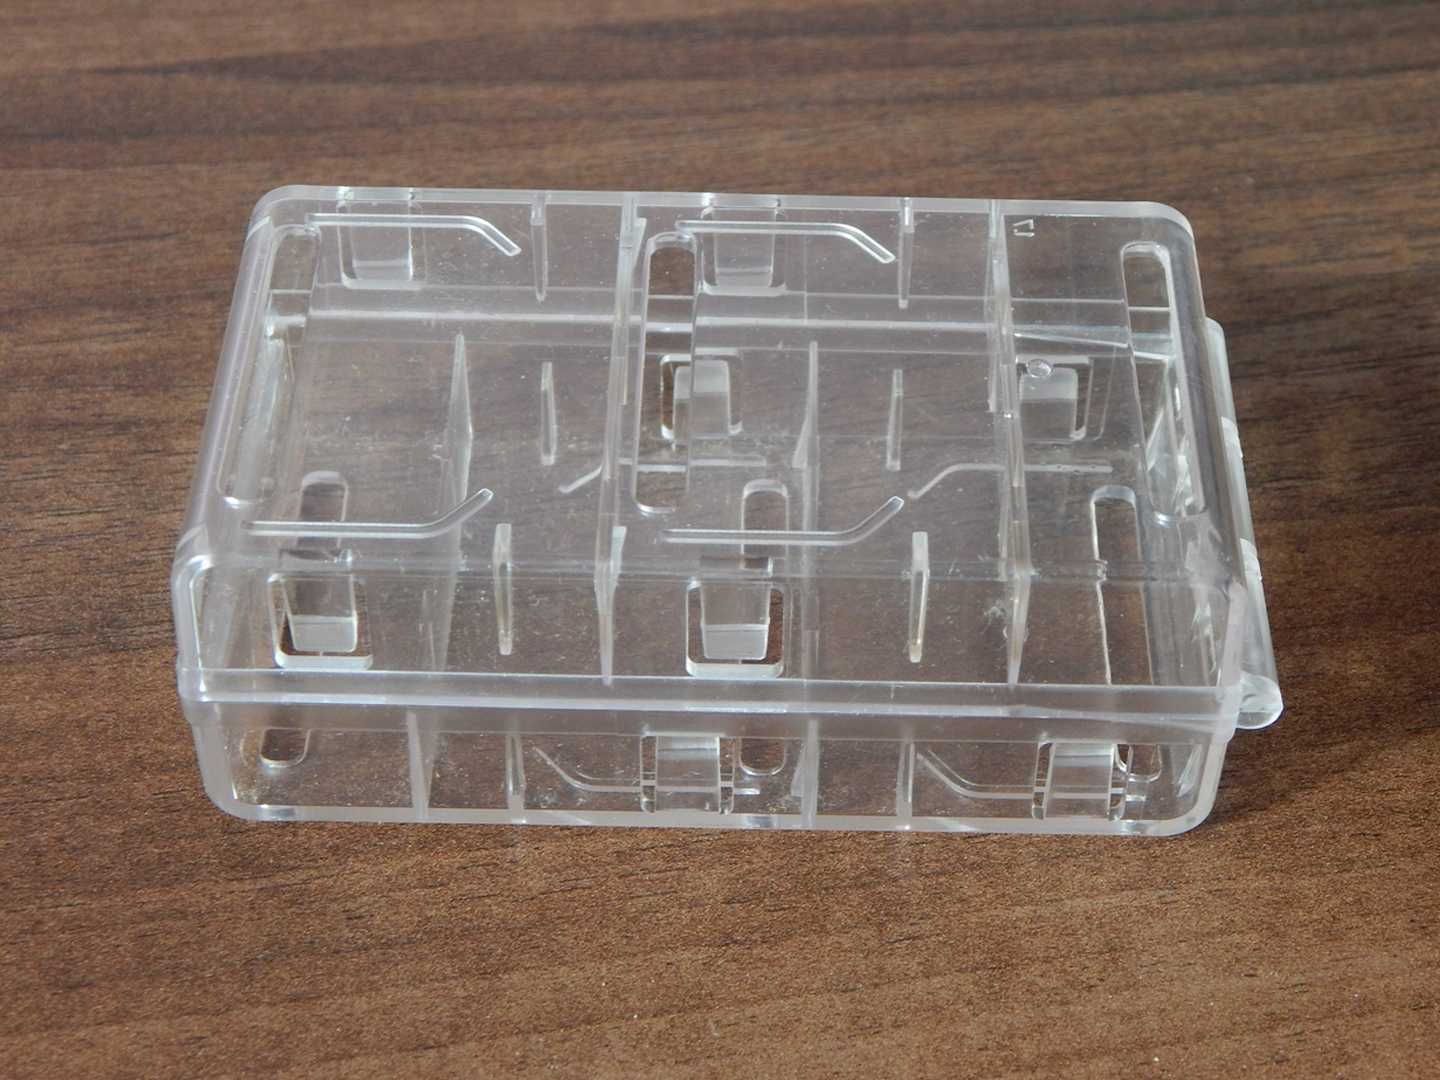 Caseta tip cutie depozitare cu capac pt baterii/medicamente noua